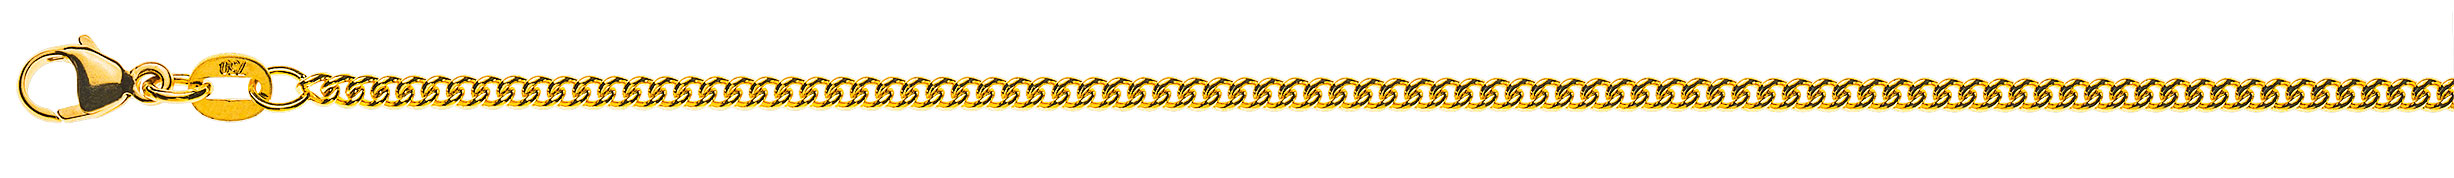 AURONOS Prestige Necklace yellow gold 18K round curb chain 42cm 2.1mm